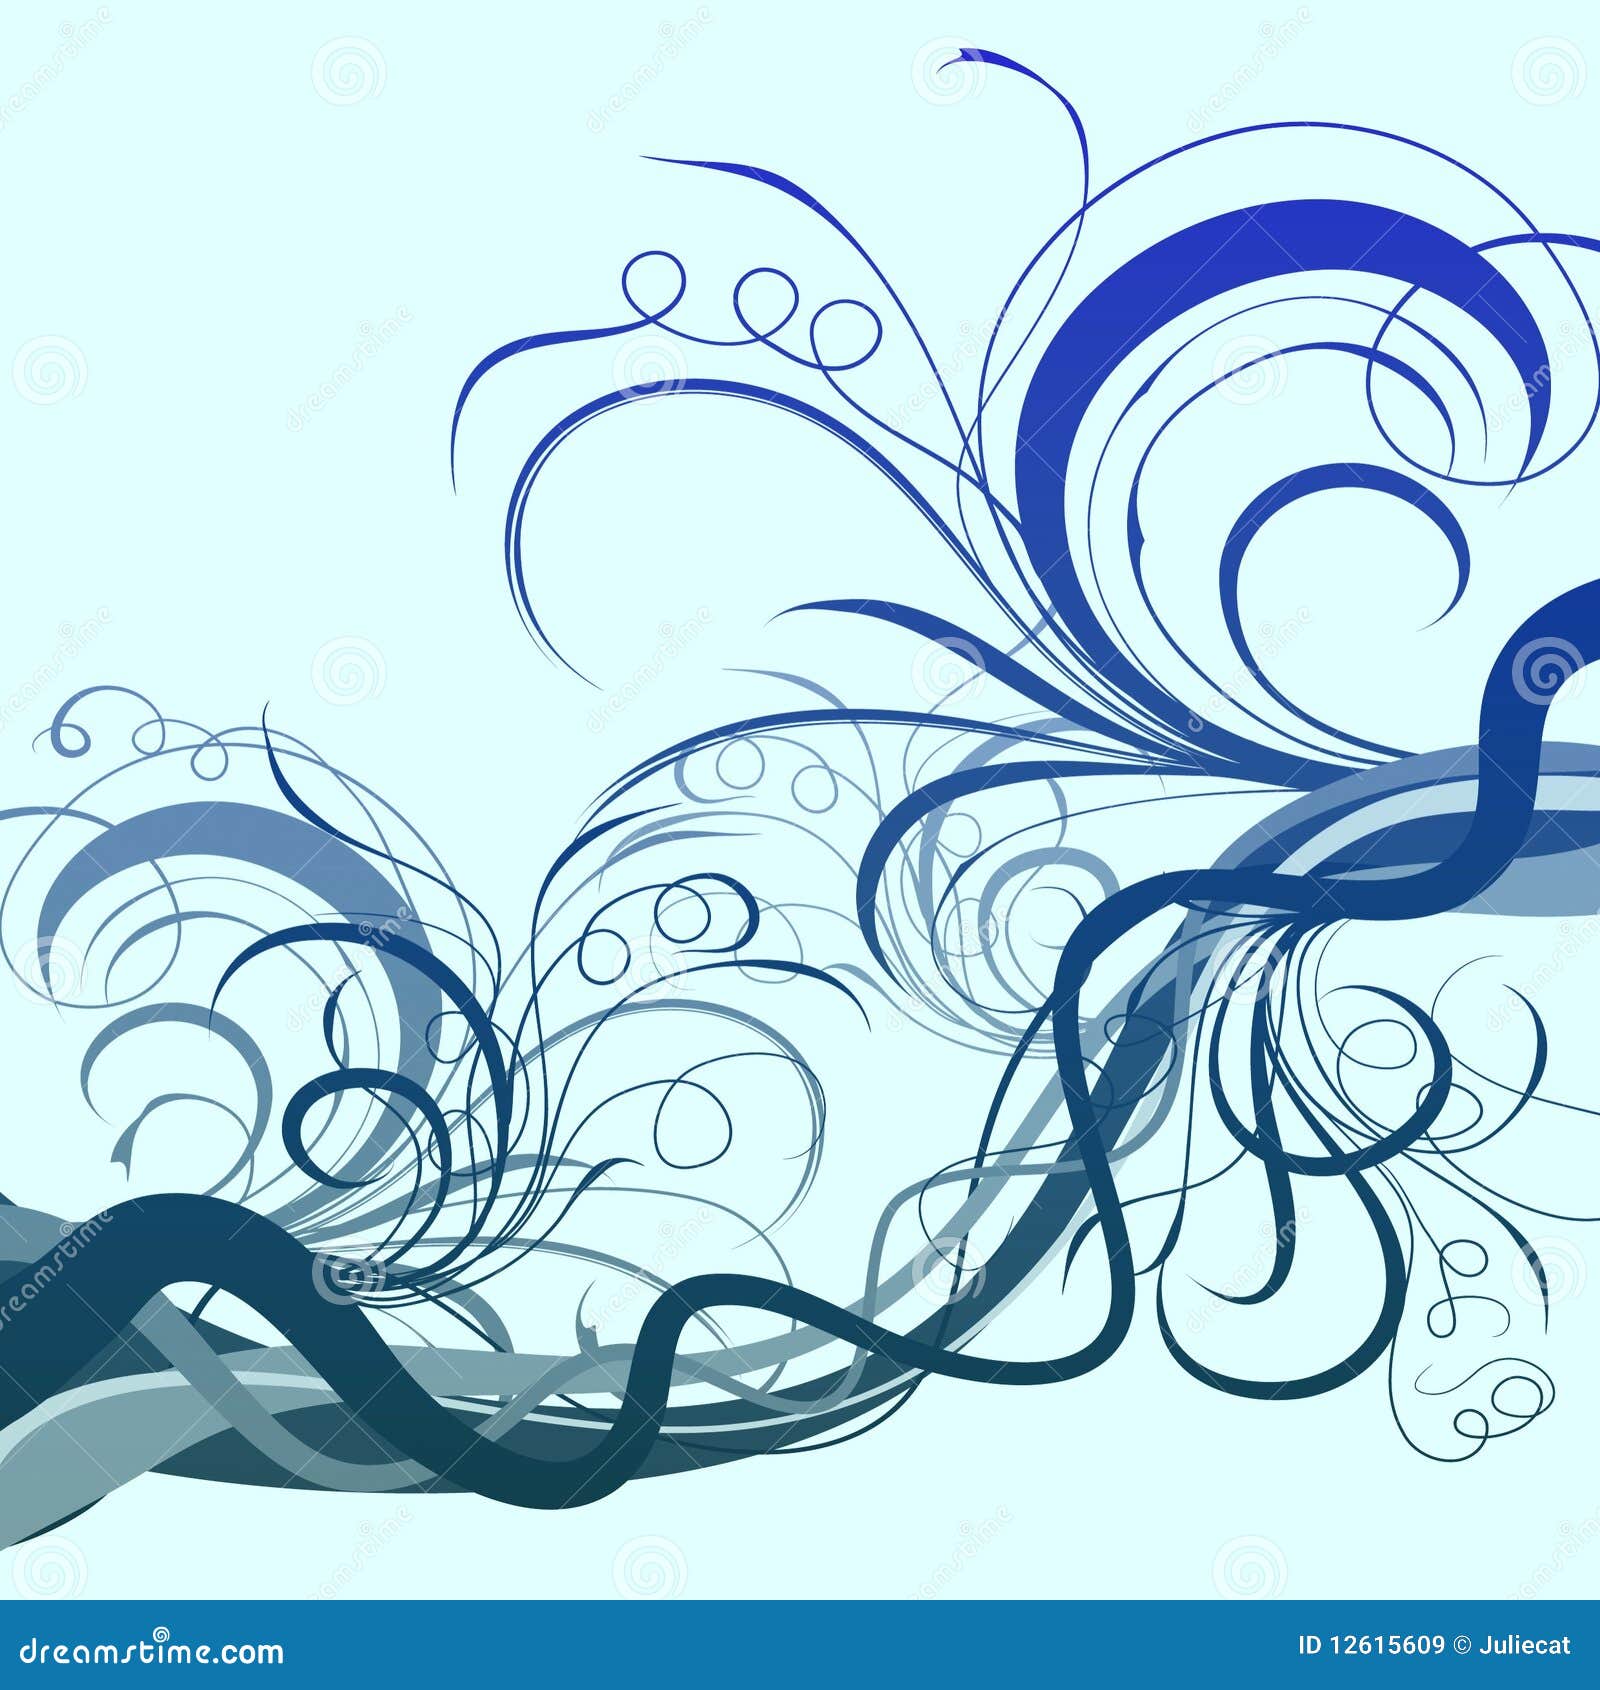 shaded blue swirls background